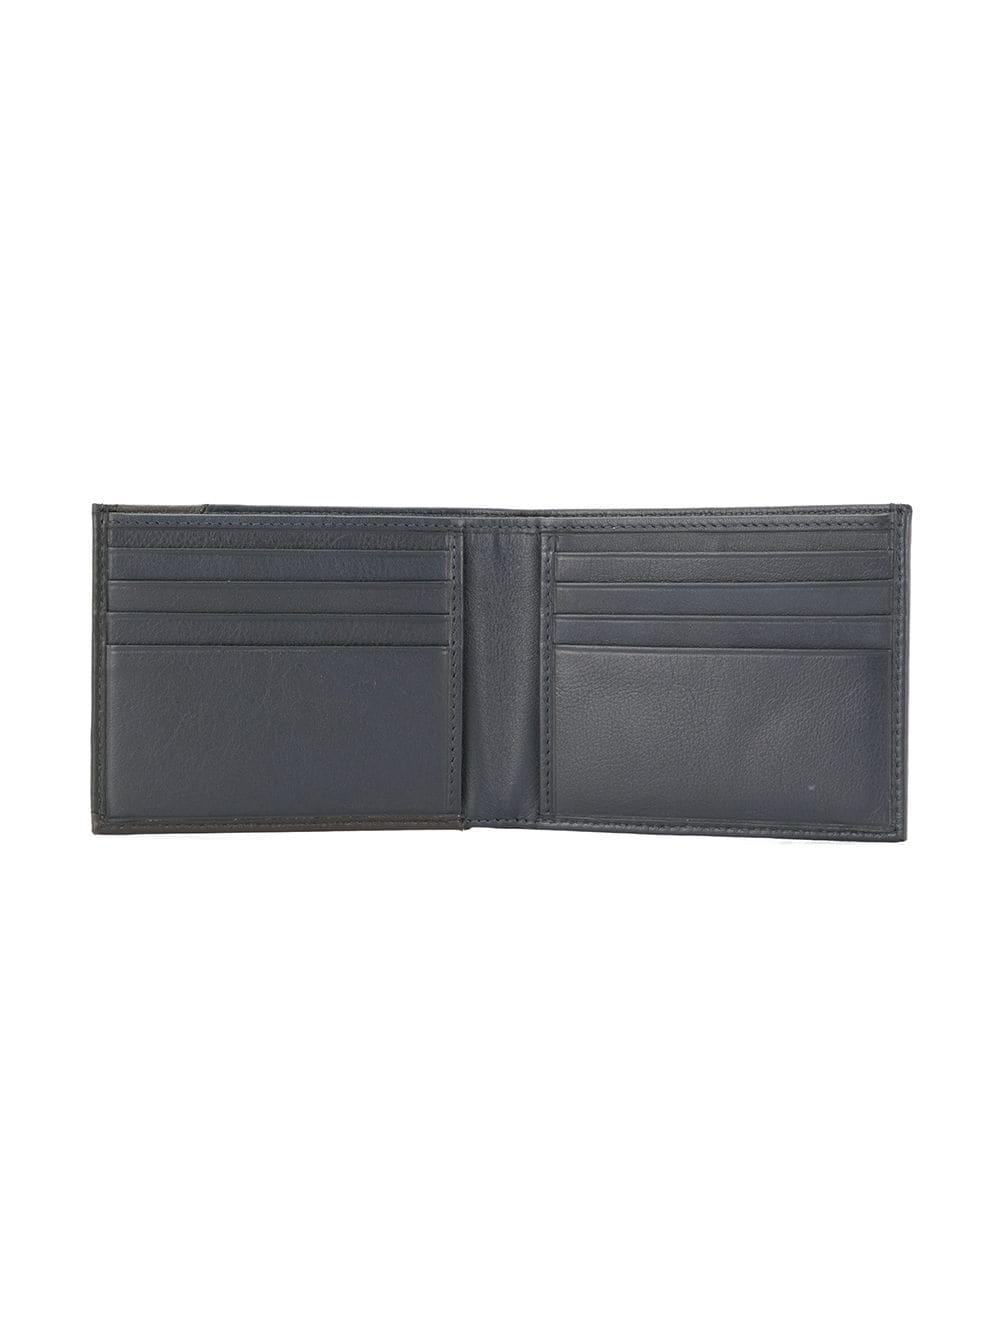 Cerruti 1881 Leather Blue Panel Wallet for Men - Lyst